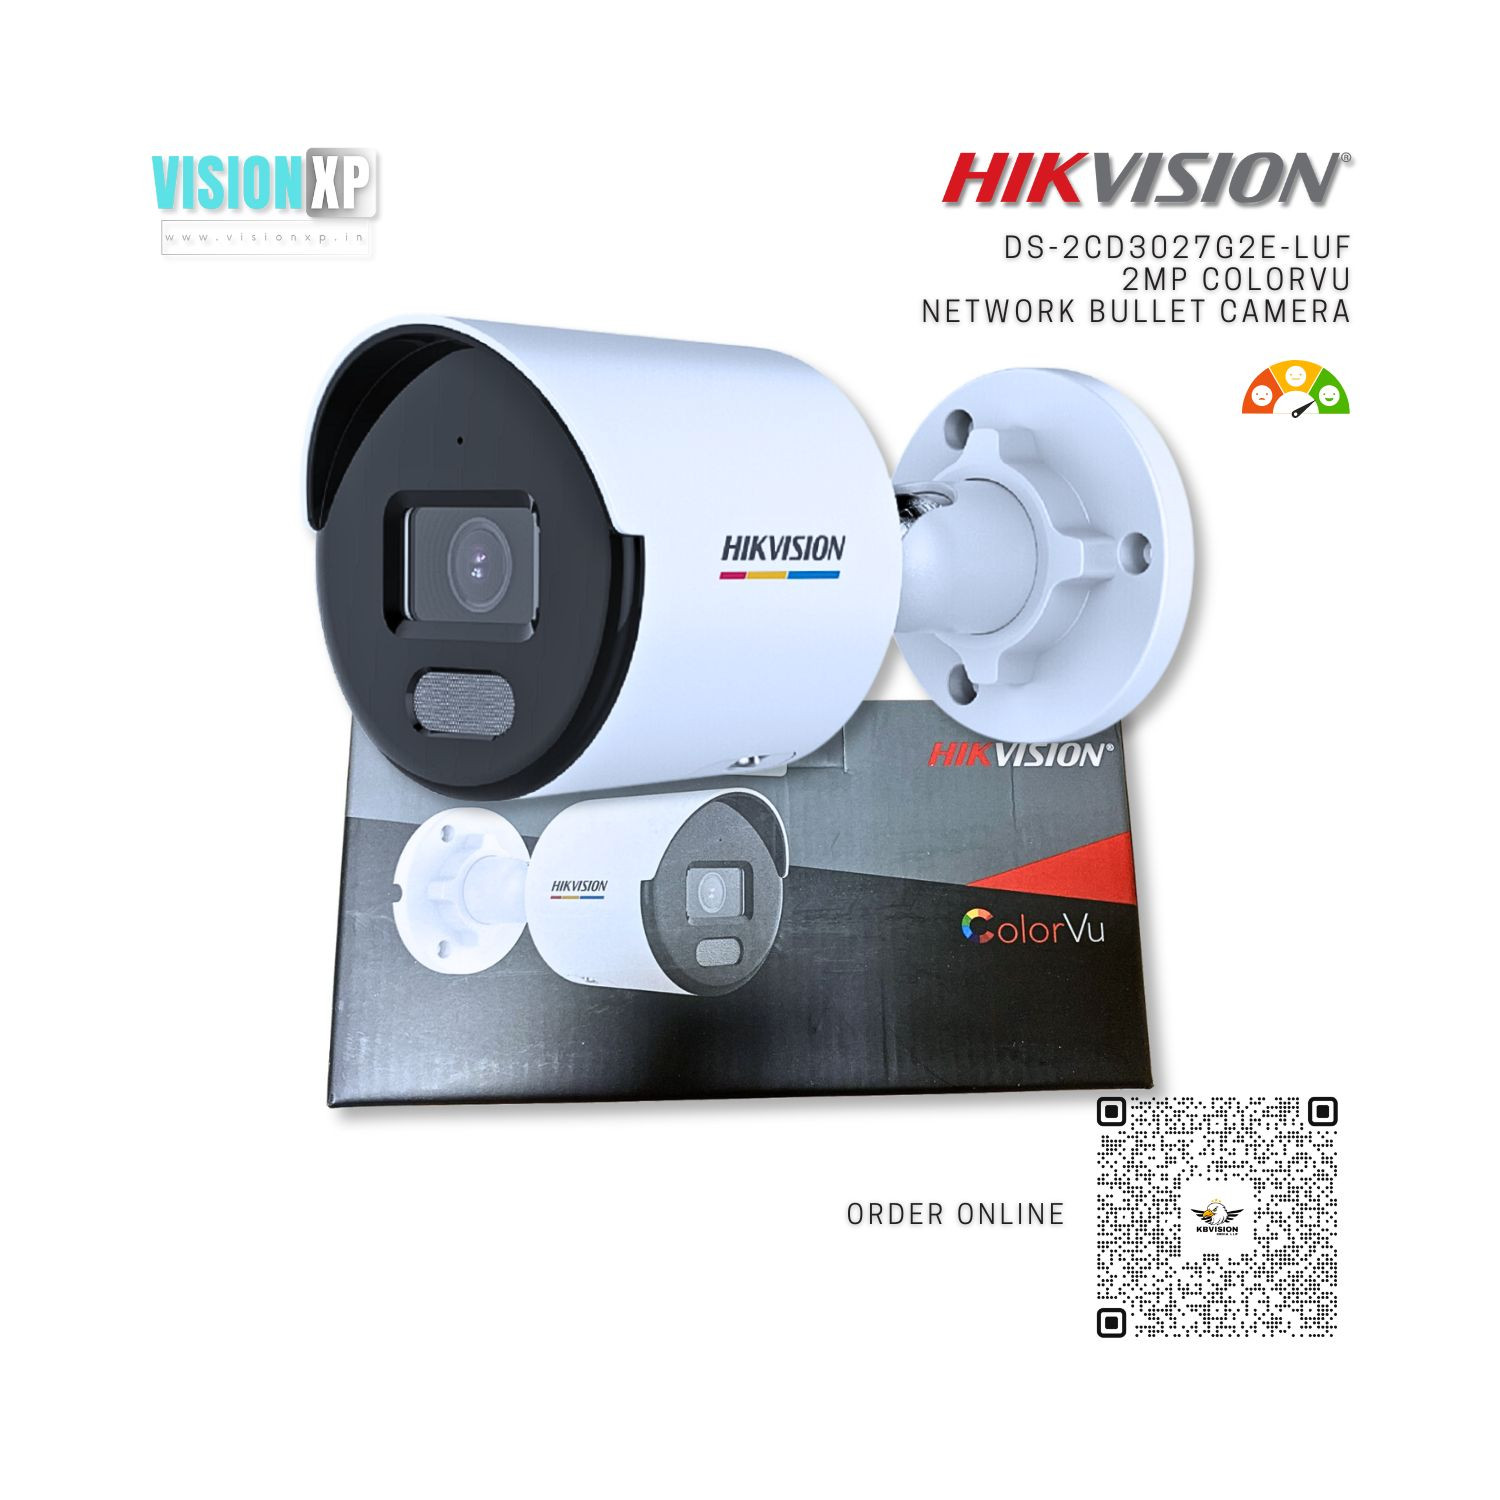 Hikvision DS-2CD3027G2E-LUF 2MP ColorVu IR Network Bullet Camera